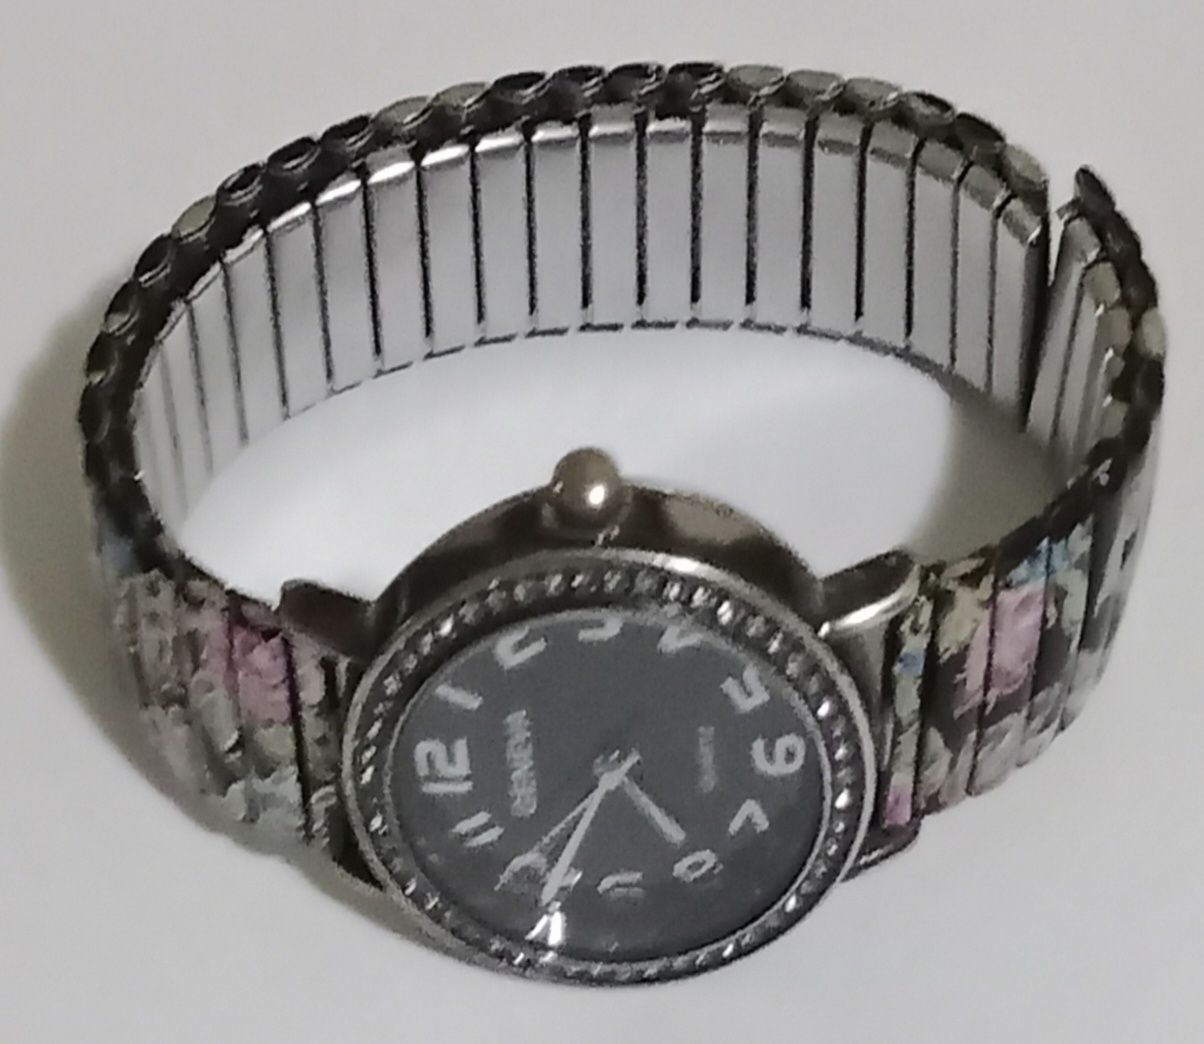 Наручные часы Geneva, бренд Япония